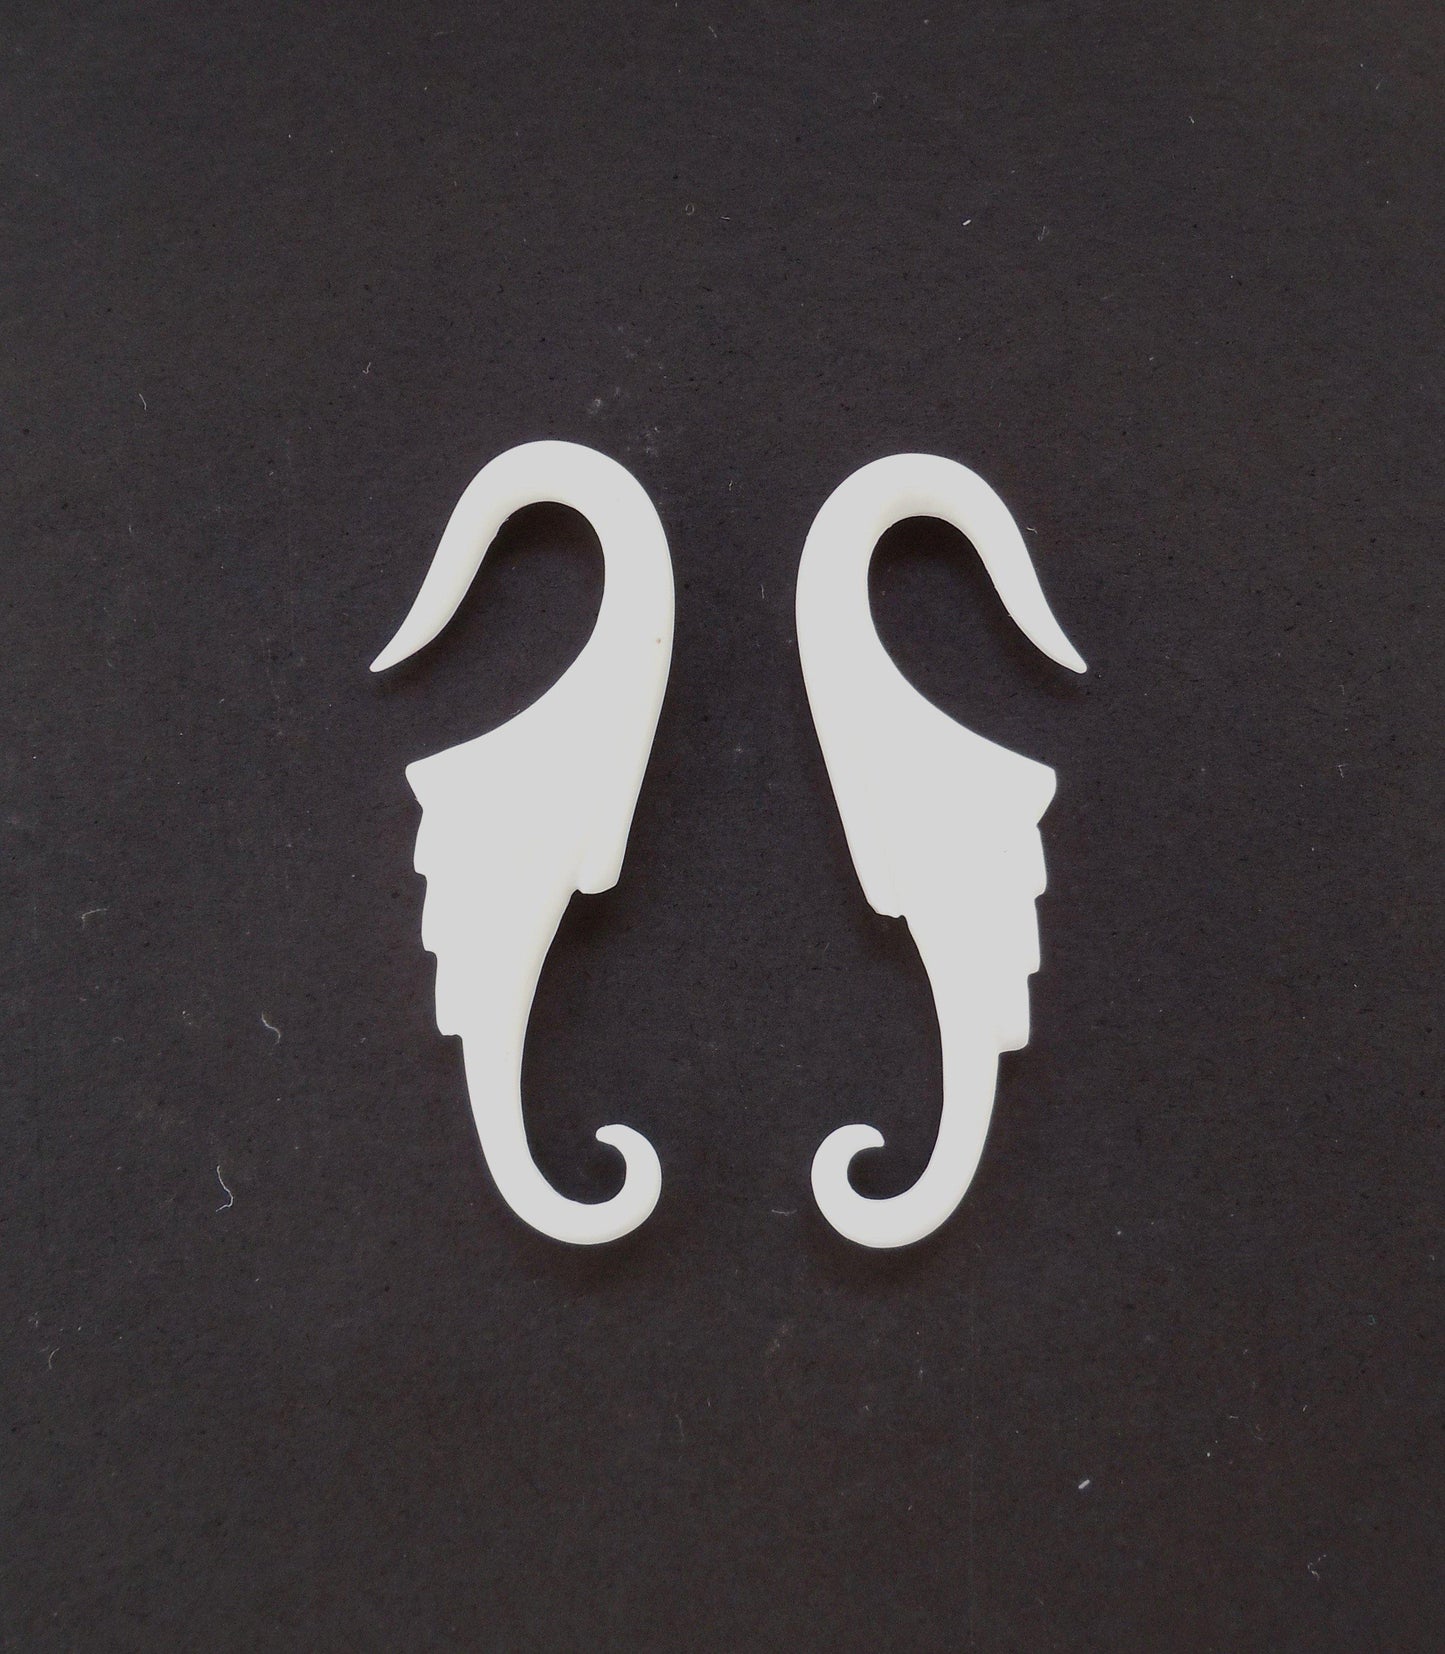 Earrings for Stretched Ears :|: Wings. Bone 12g gauge earrings.